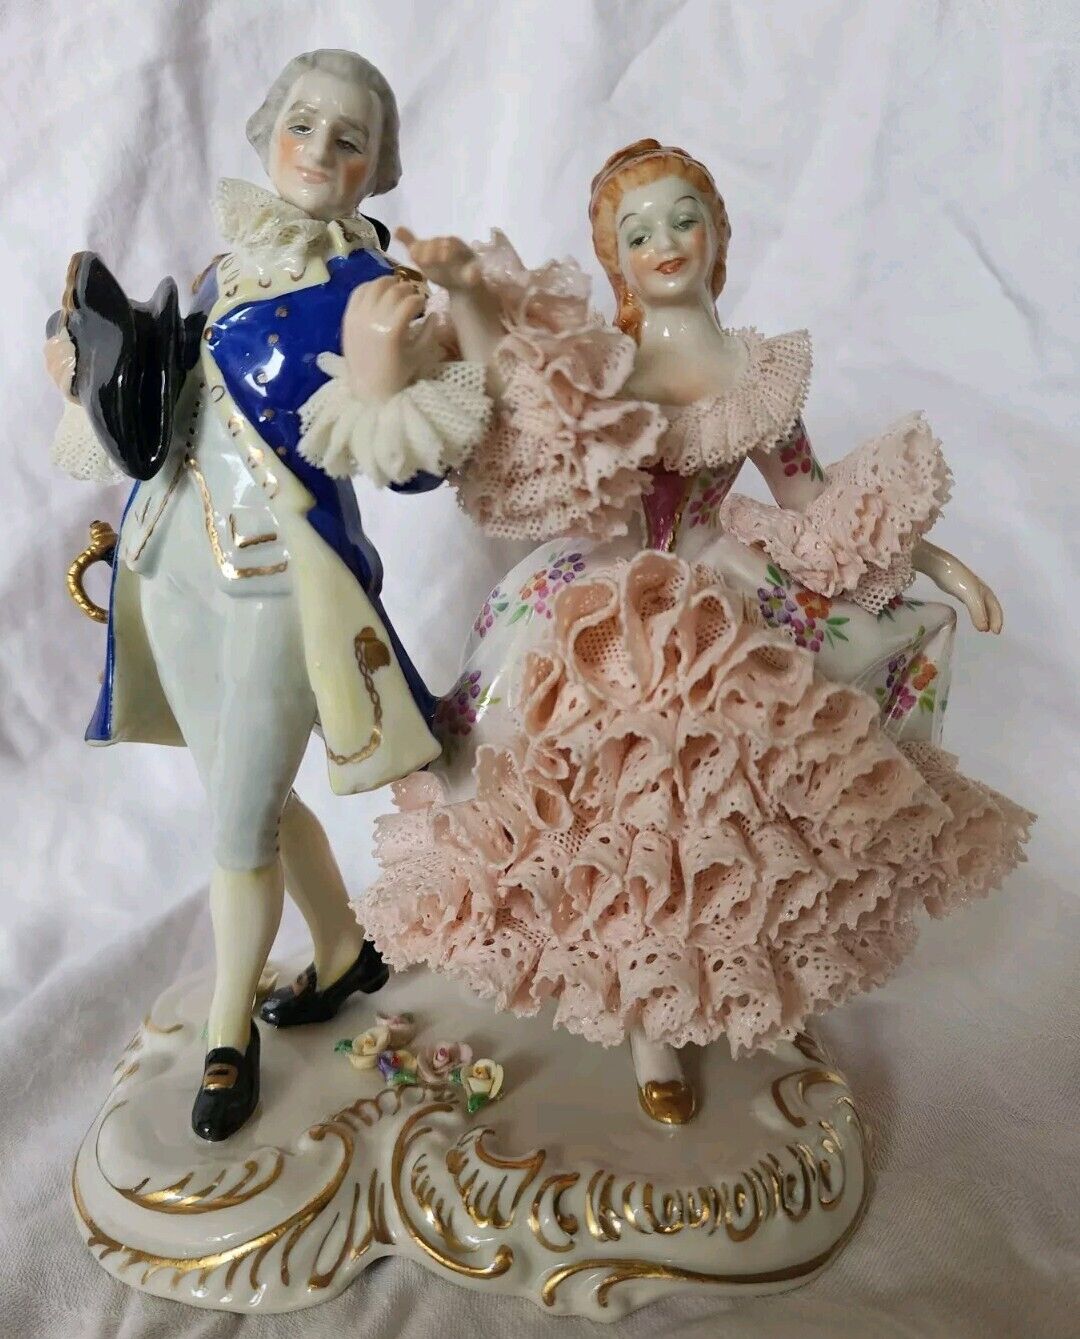 RARE MZ Irish Dresden Lace Figurine Couple